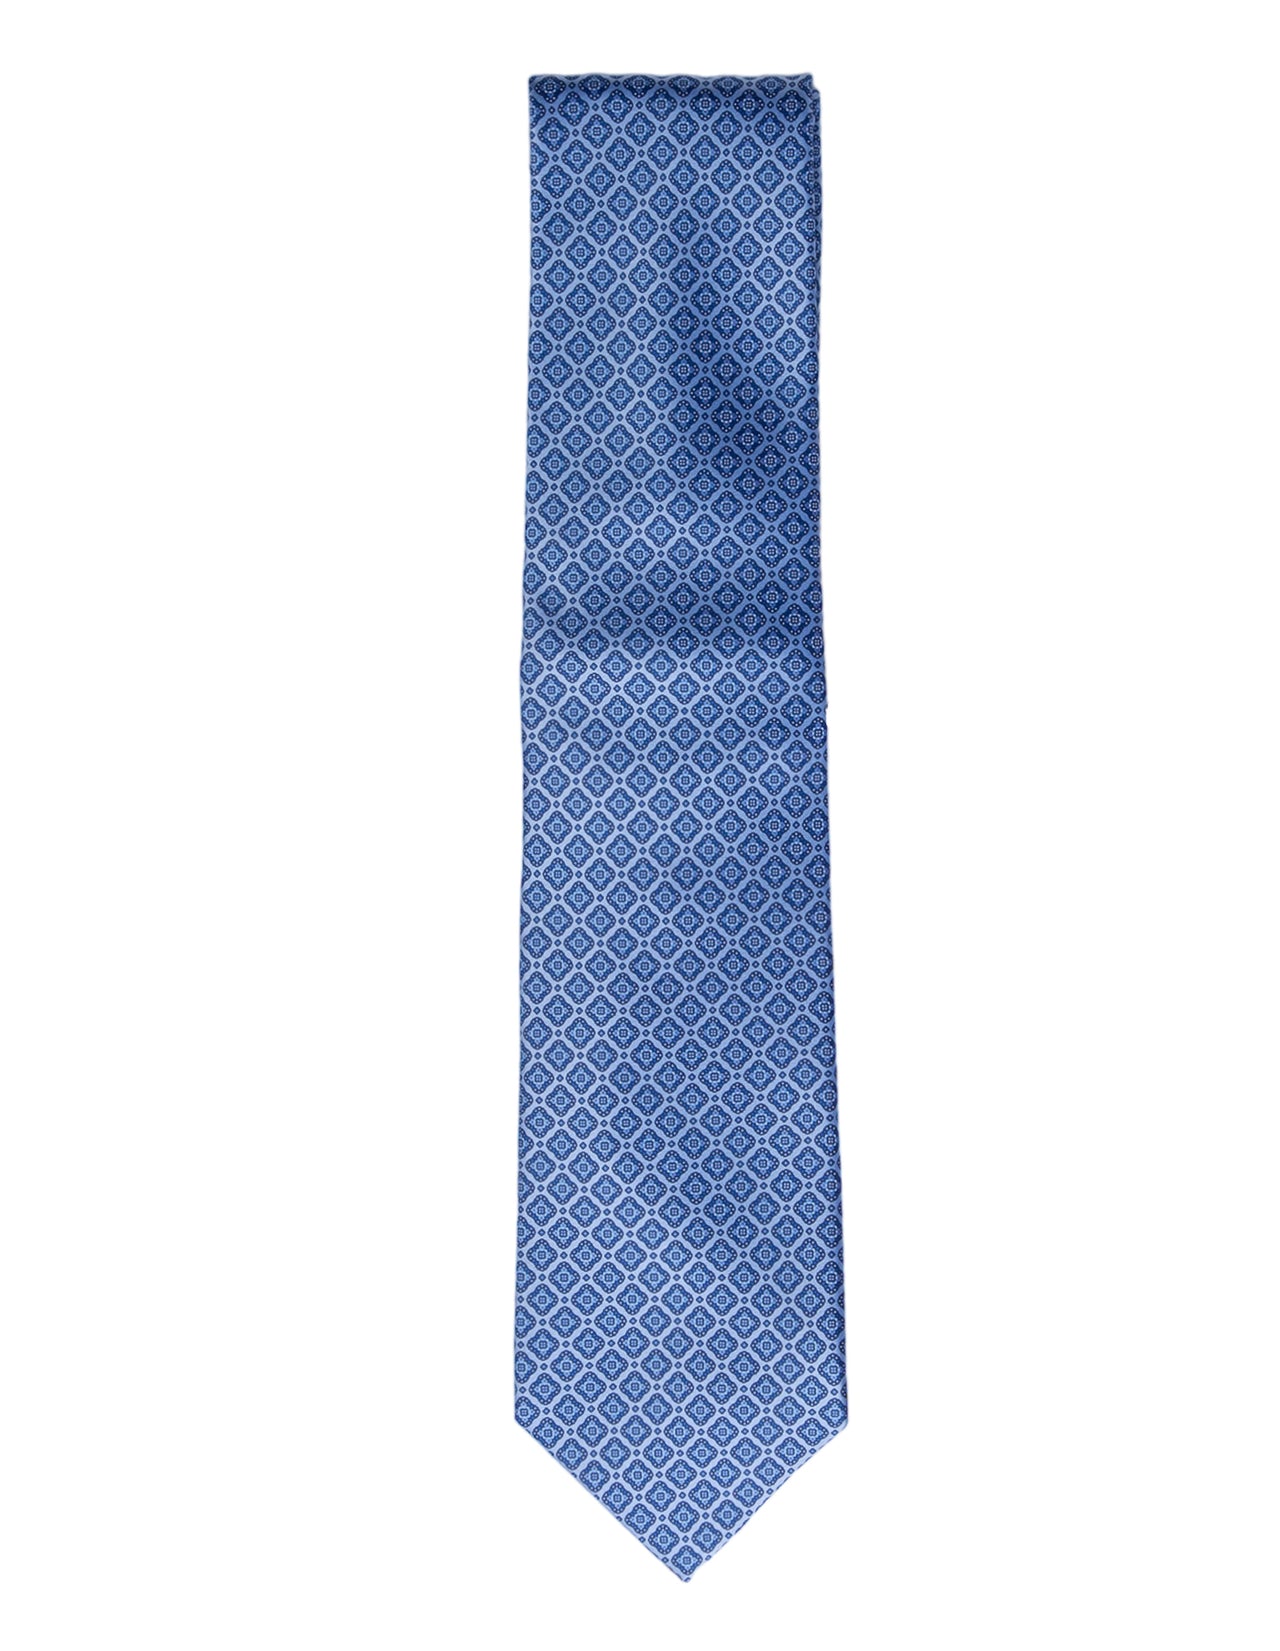 STEFANO RICCI Silk Tie & Pocket Square Set LIGHT BLUE